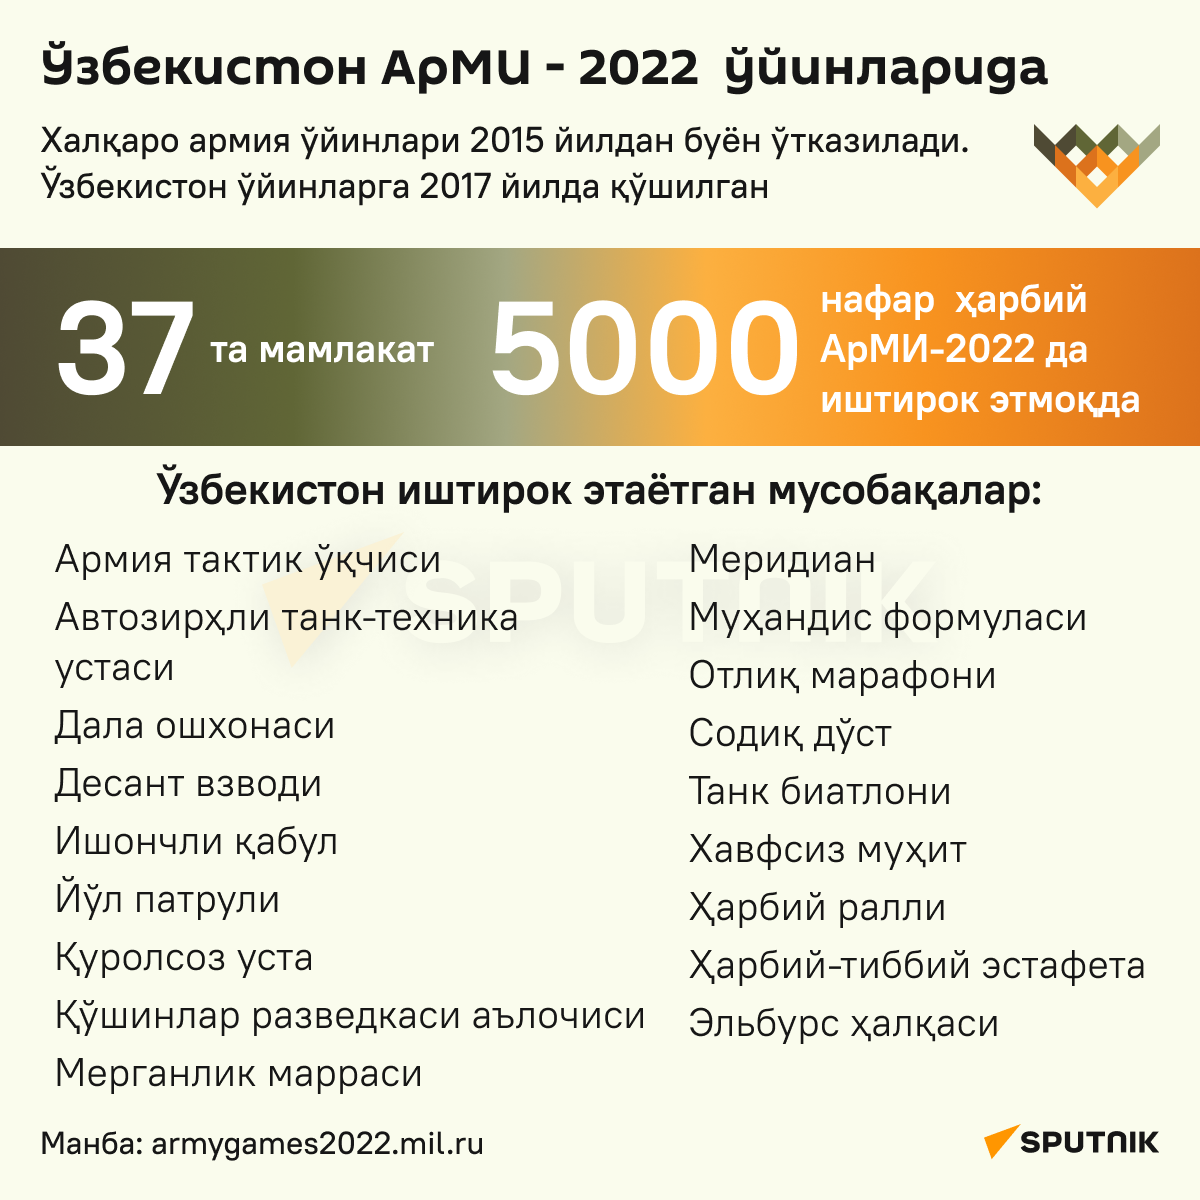 Узбекистон АрМИ-2022 уйинларида - Sputnik Ўзбекистон